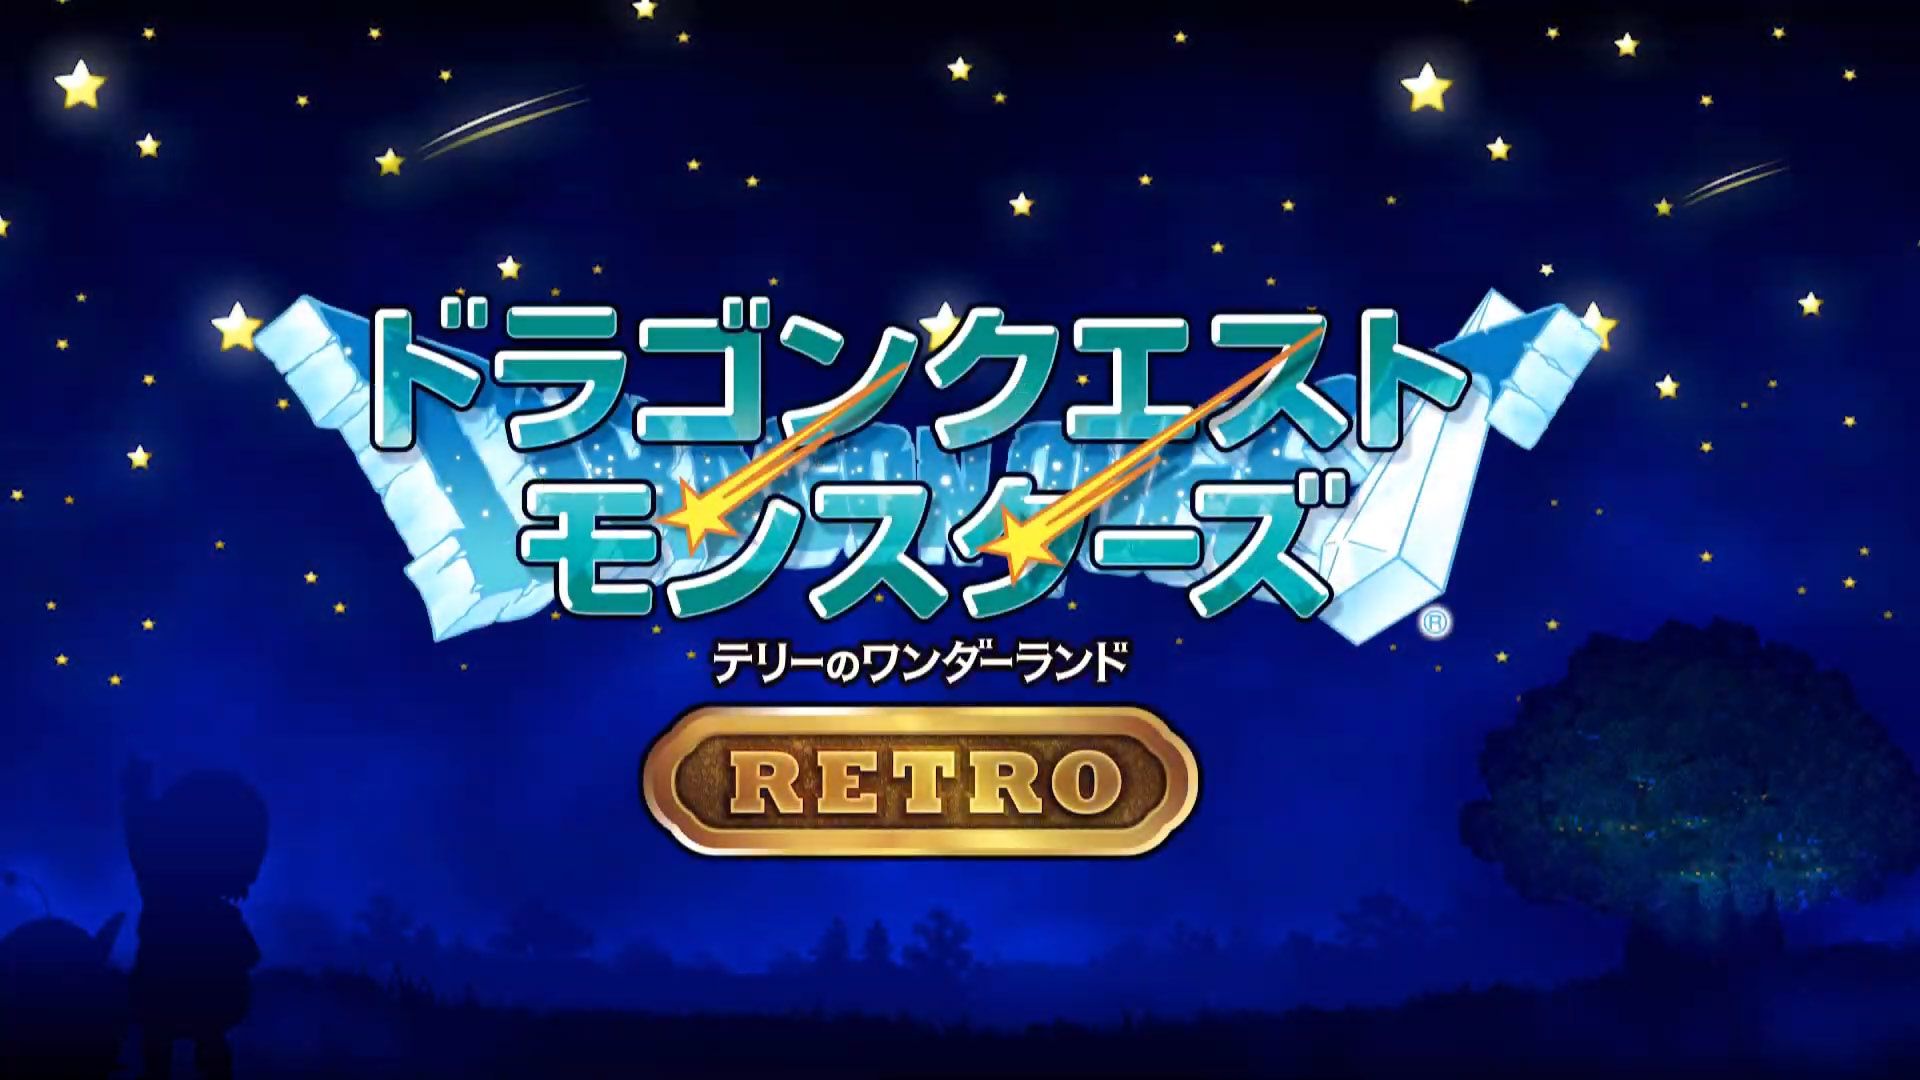 Dragon Quest Monsters: Terry's Wonderland Retro announced